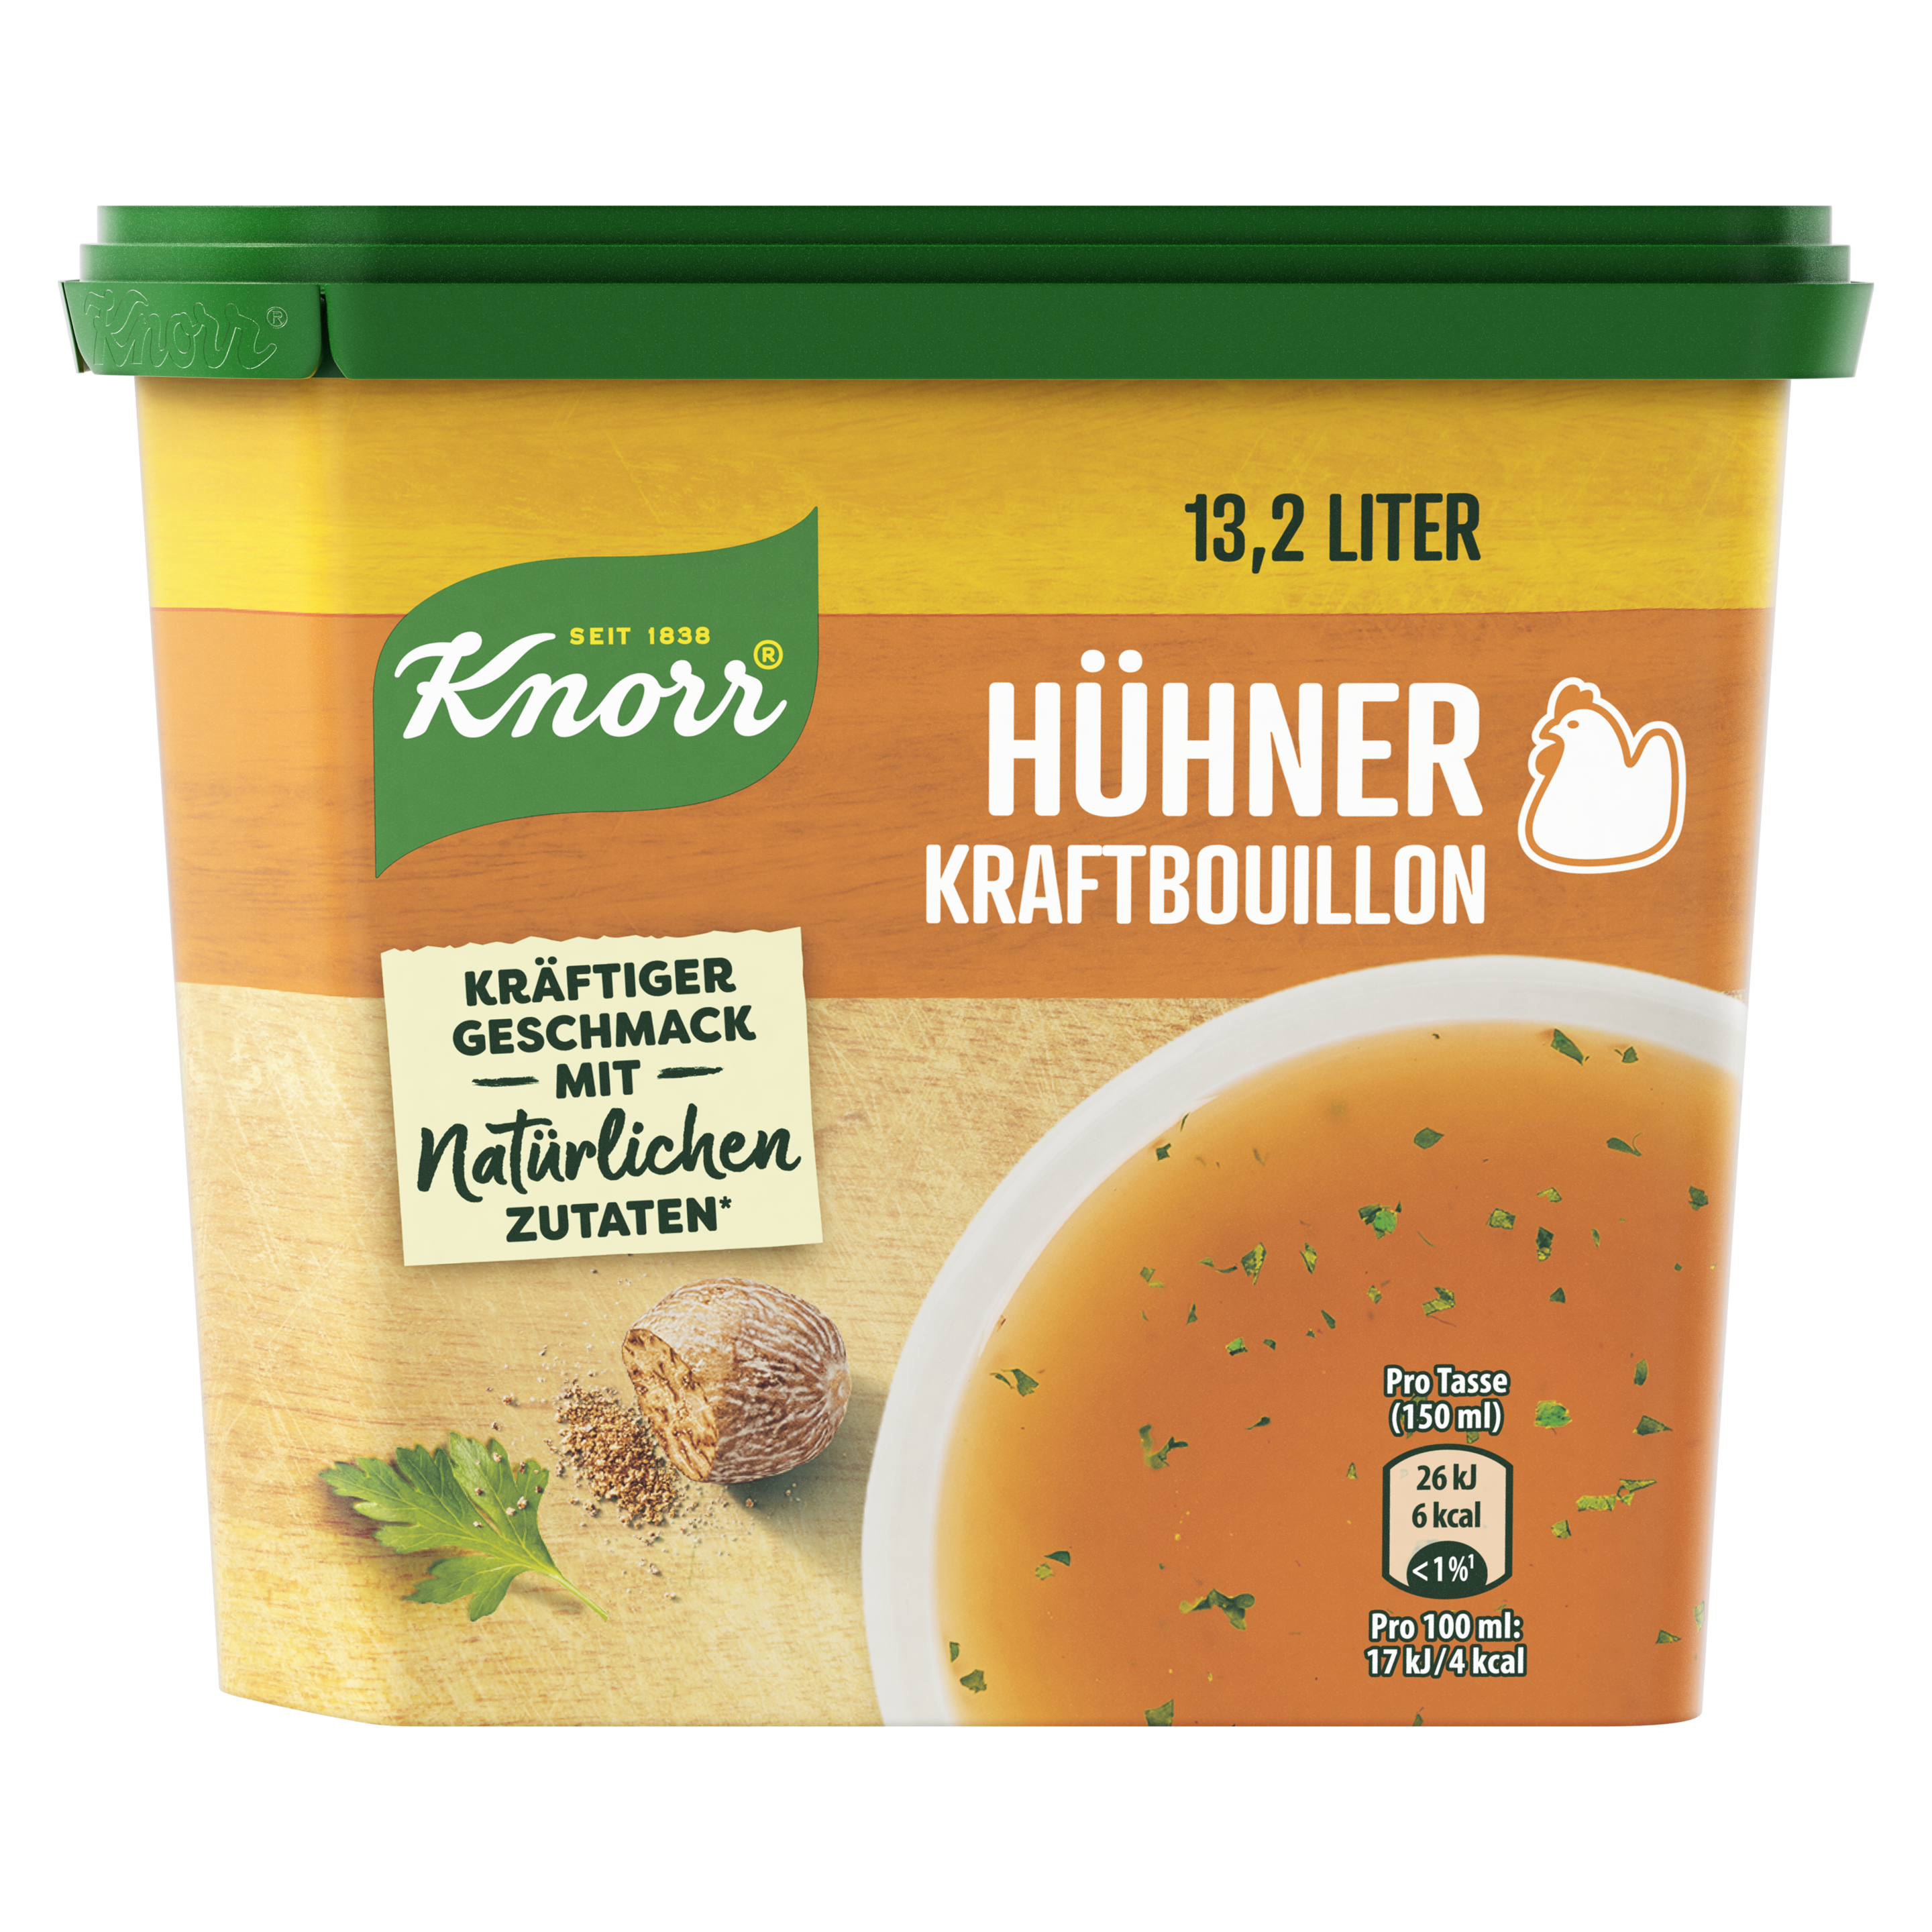 Knorr Bouillon Hühner Kraftbouillon 13,2L Dose